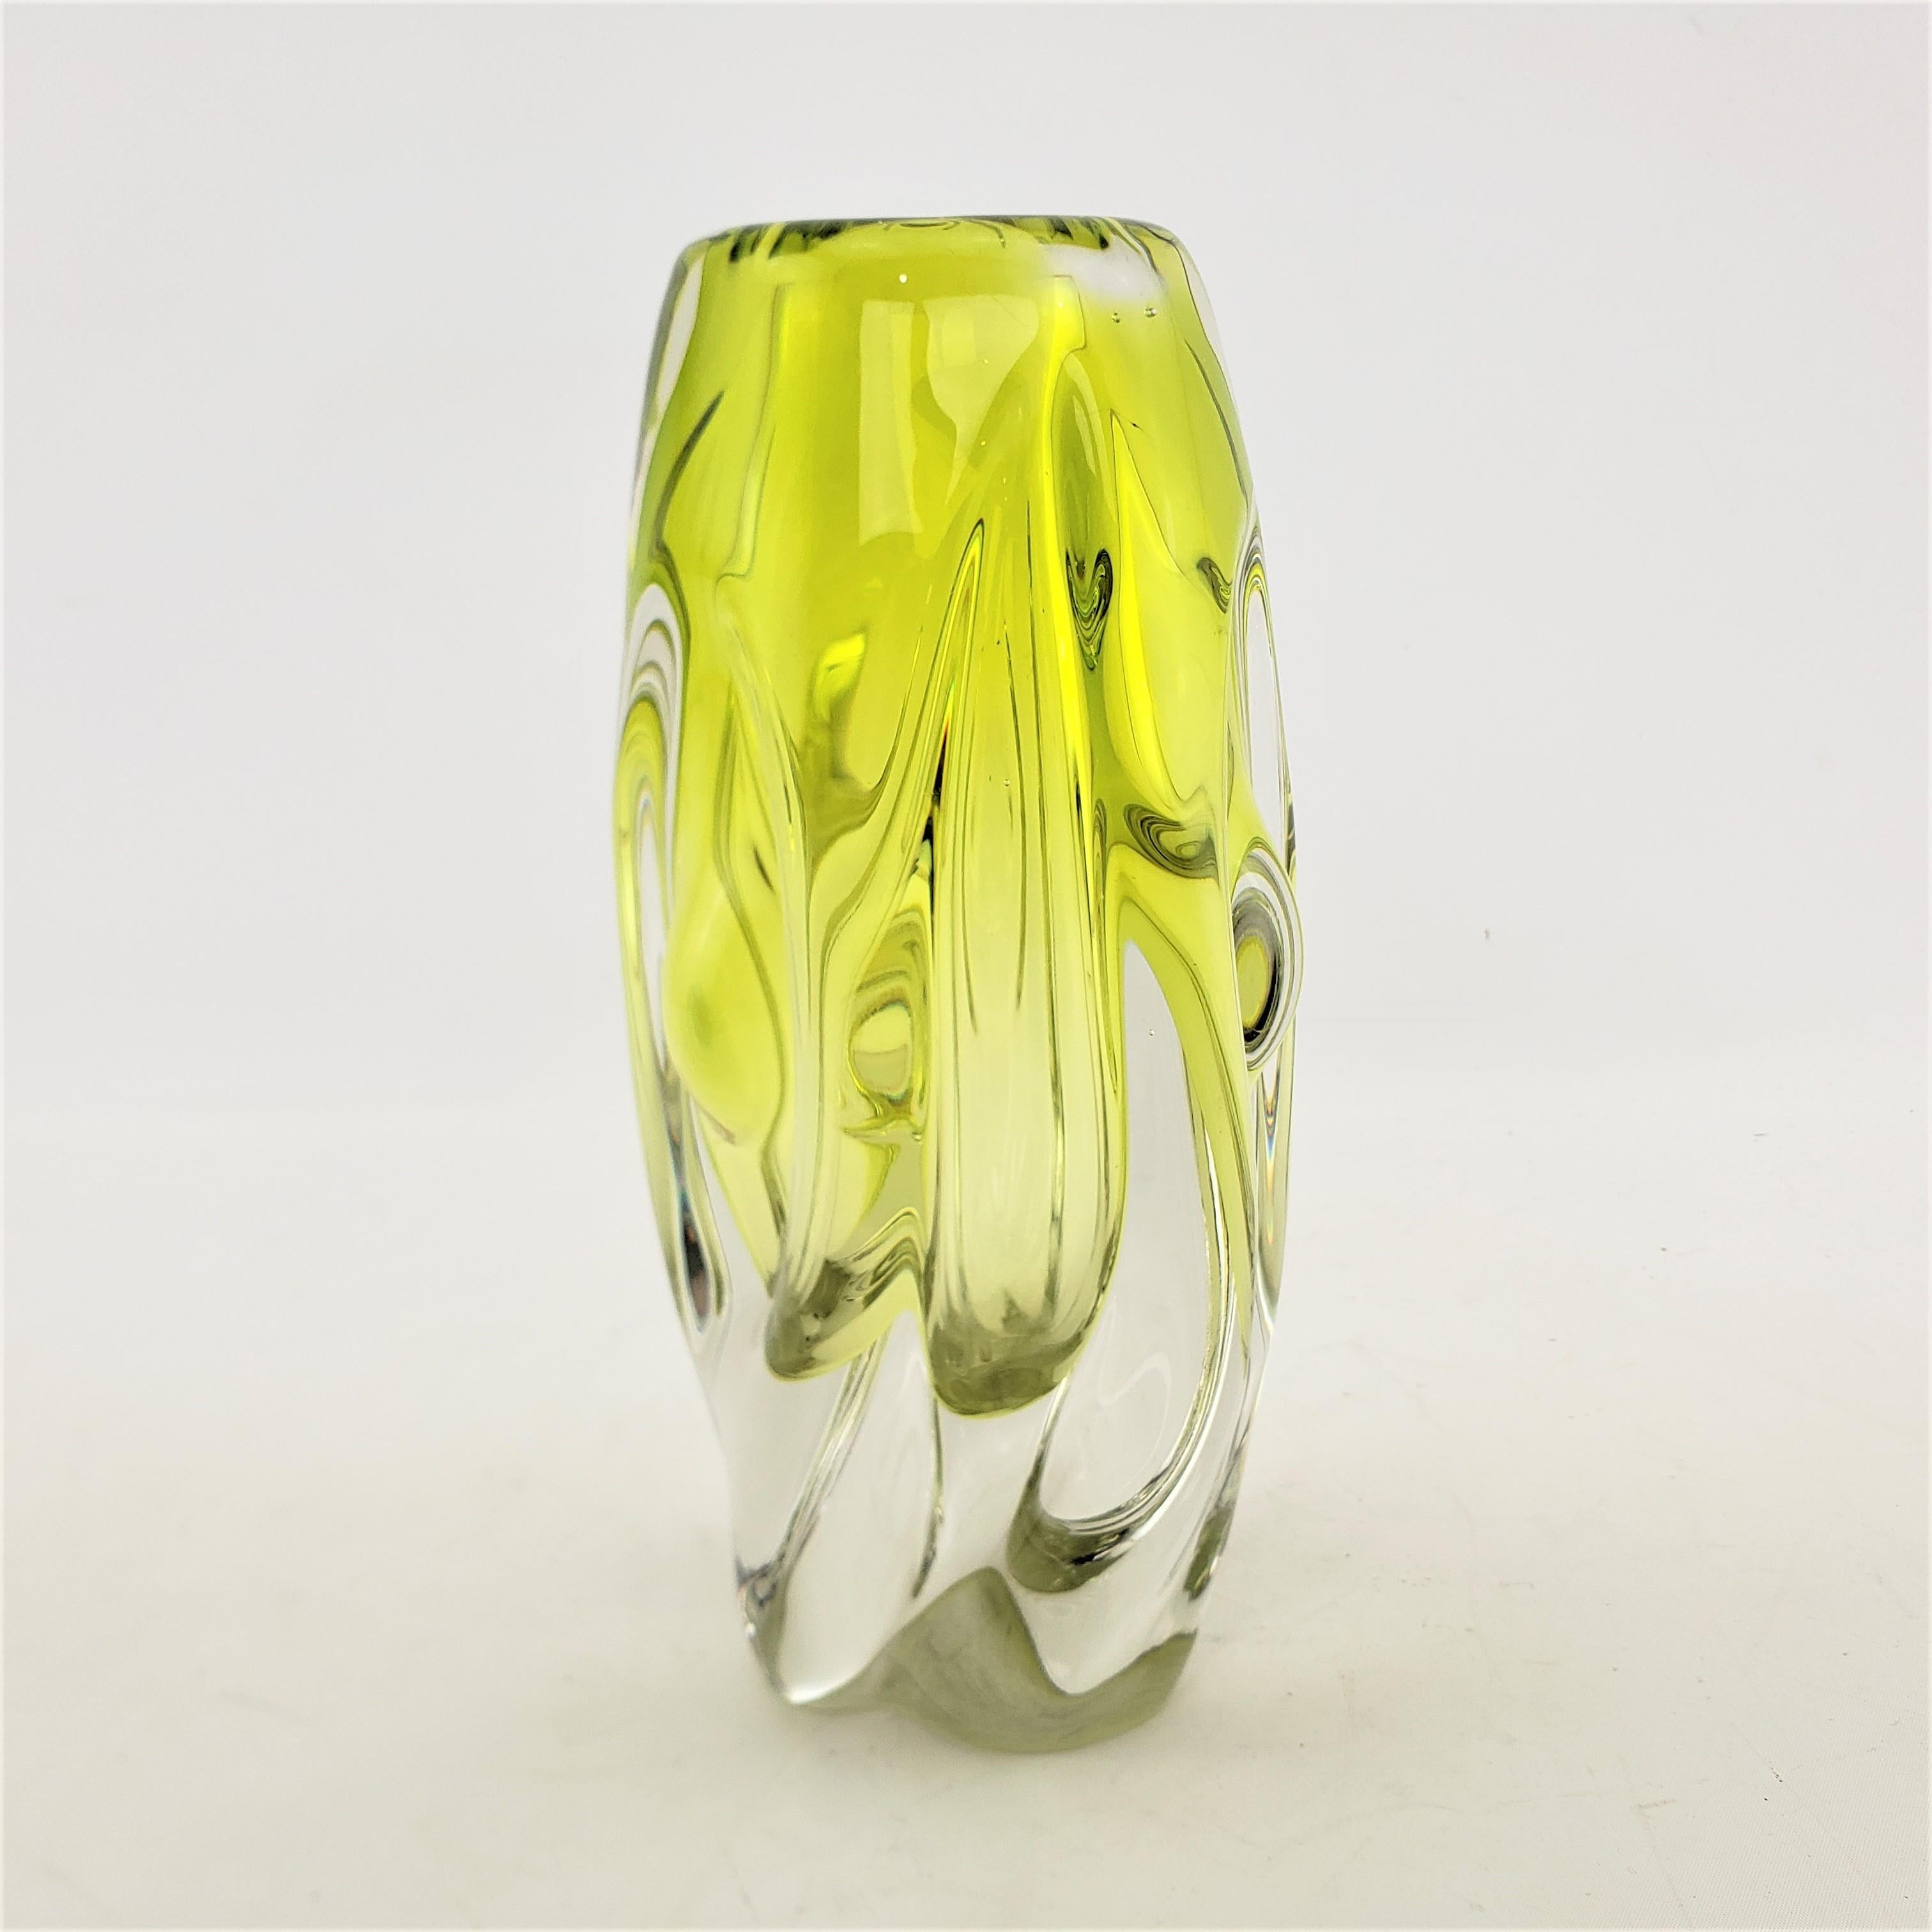 Mid-Century Modern Czech Republic Uranium Art Glass 'Propeller' Styled Vase In Good Condition For Sale In Hamilton, Ontario